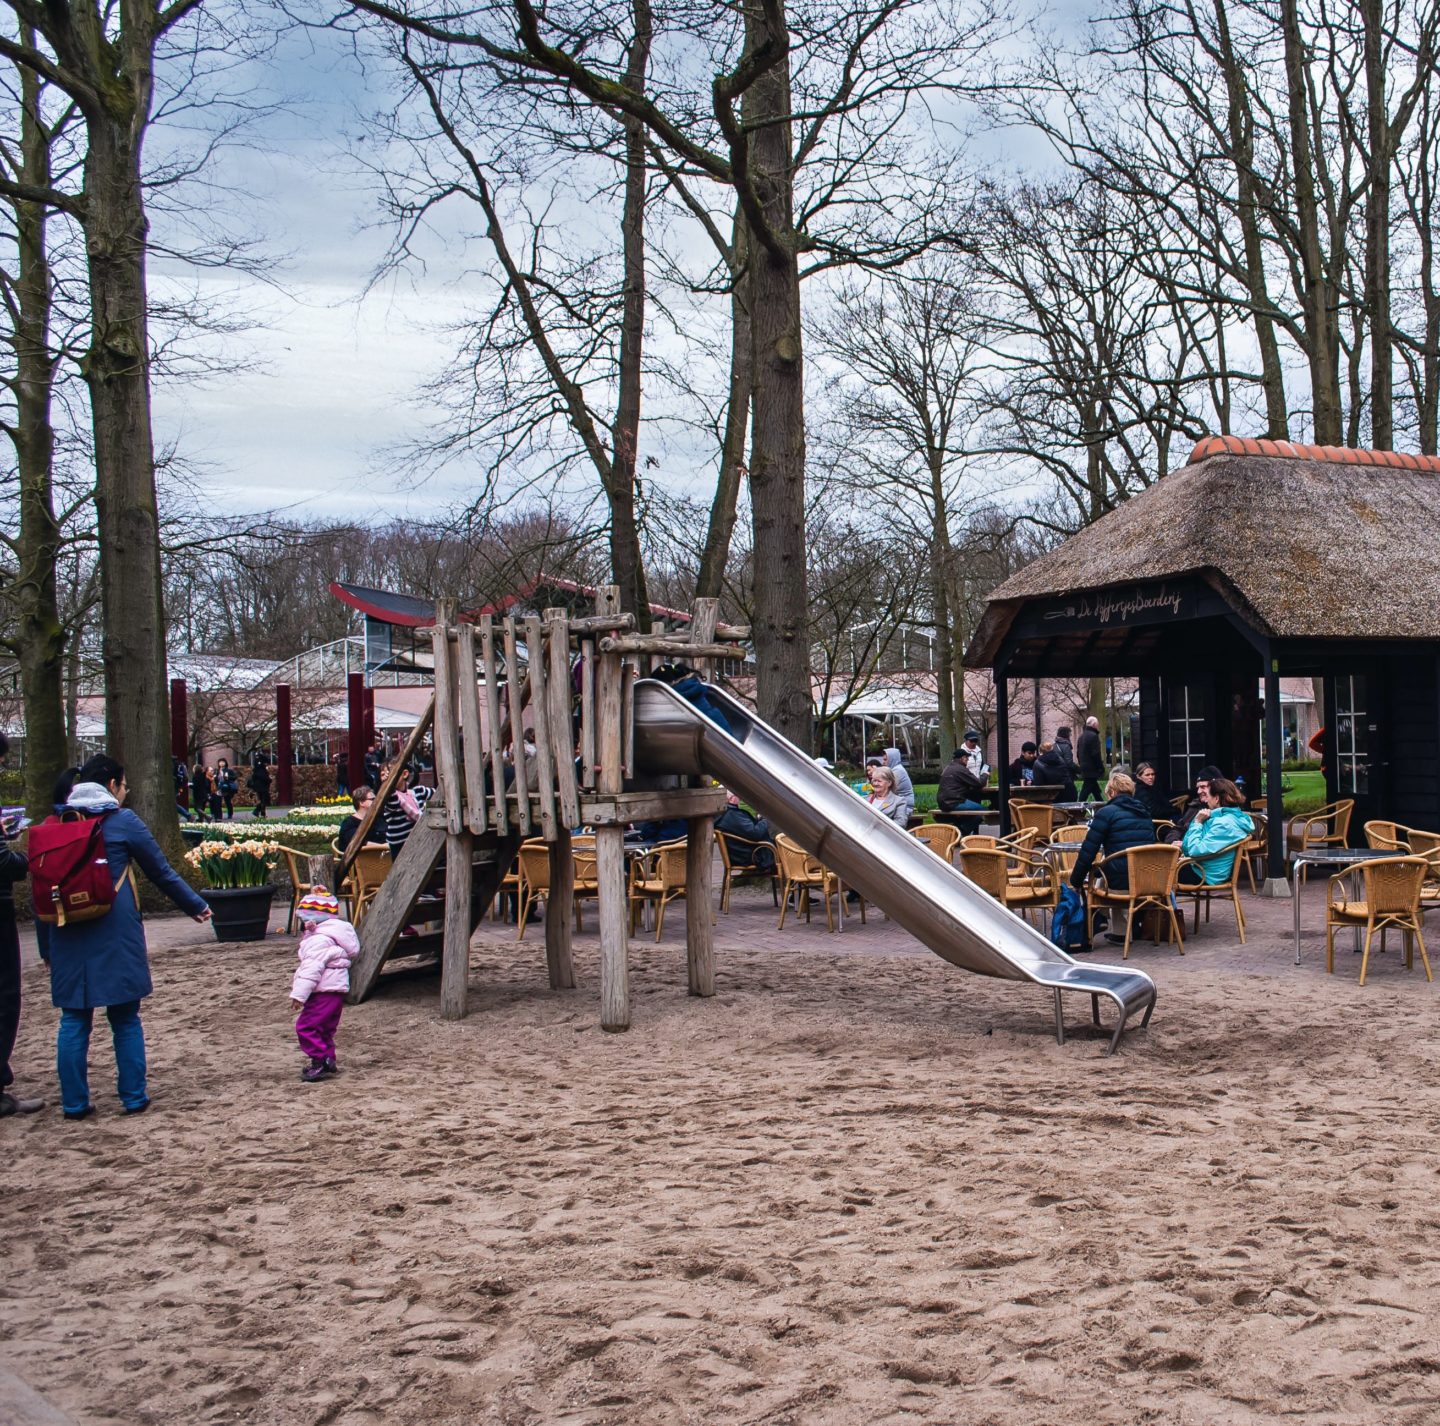 Playground plus coffee hut at Keukenhof. Other botanical gardens, take note!